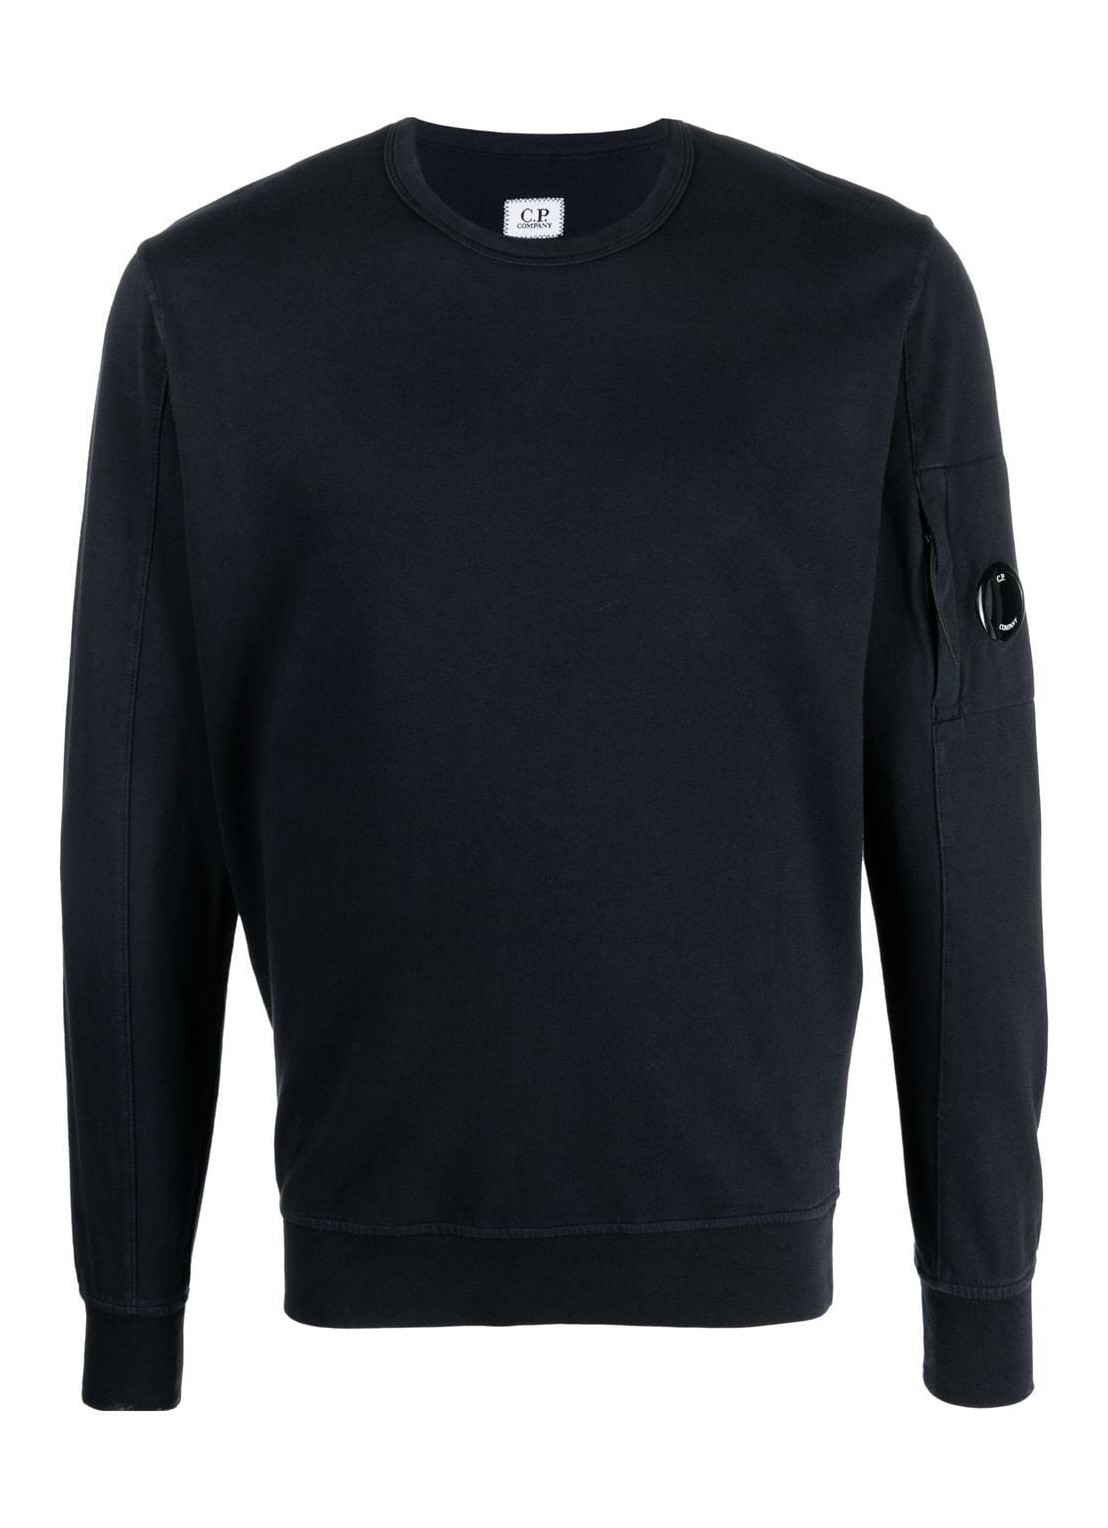 Sudadera c.p.company sweater man light fleece sweatshirt 14cmss032a002246g 868 talla XL
 